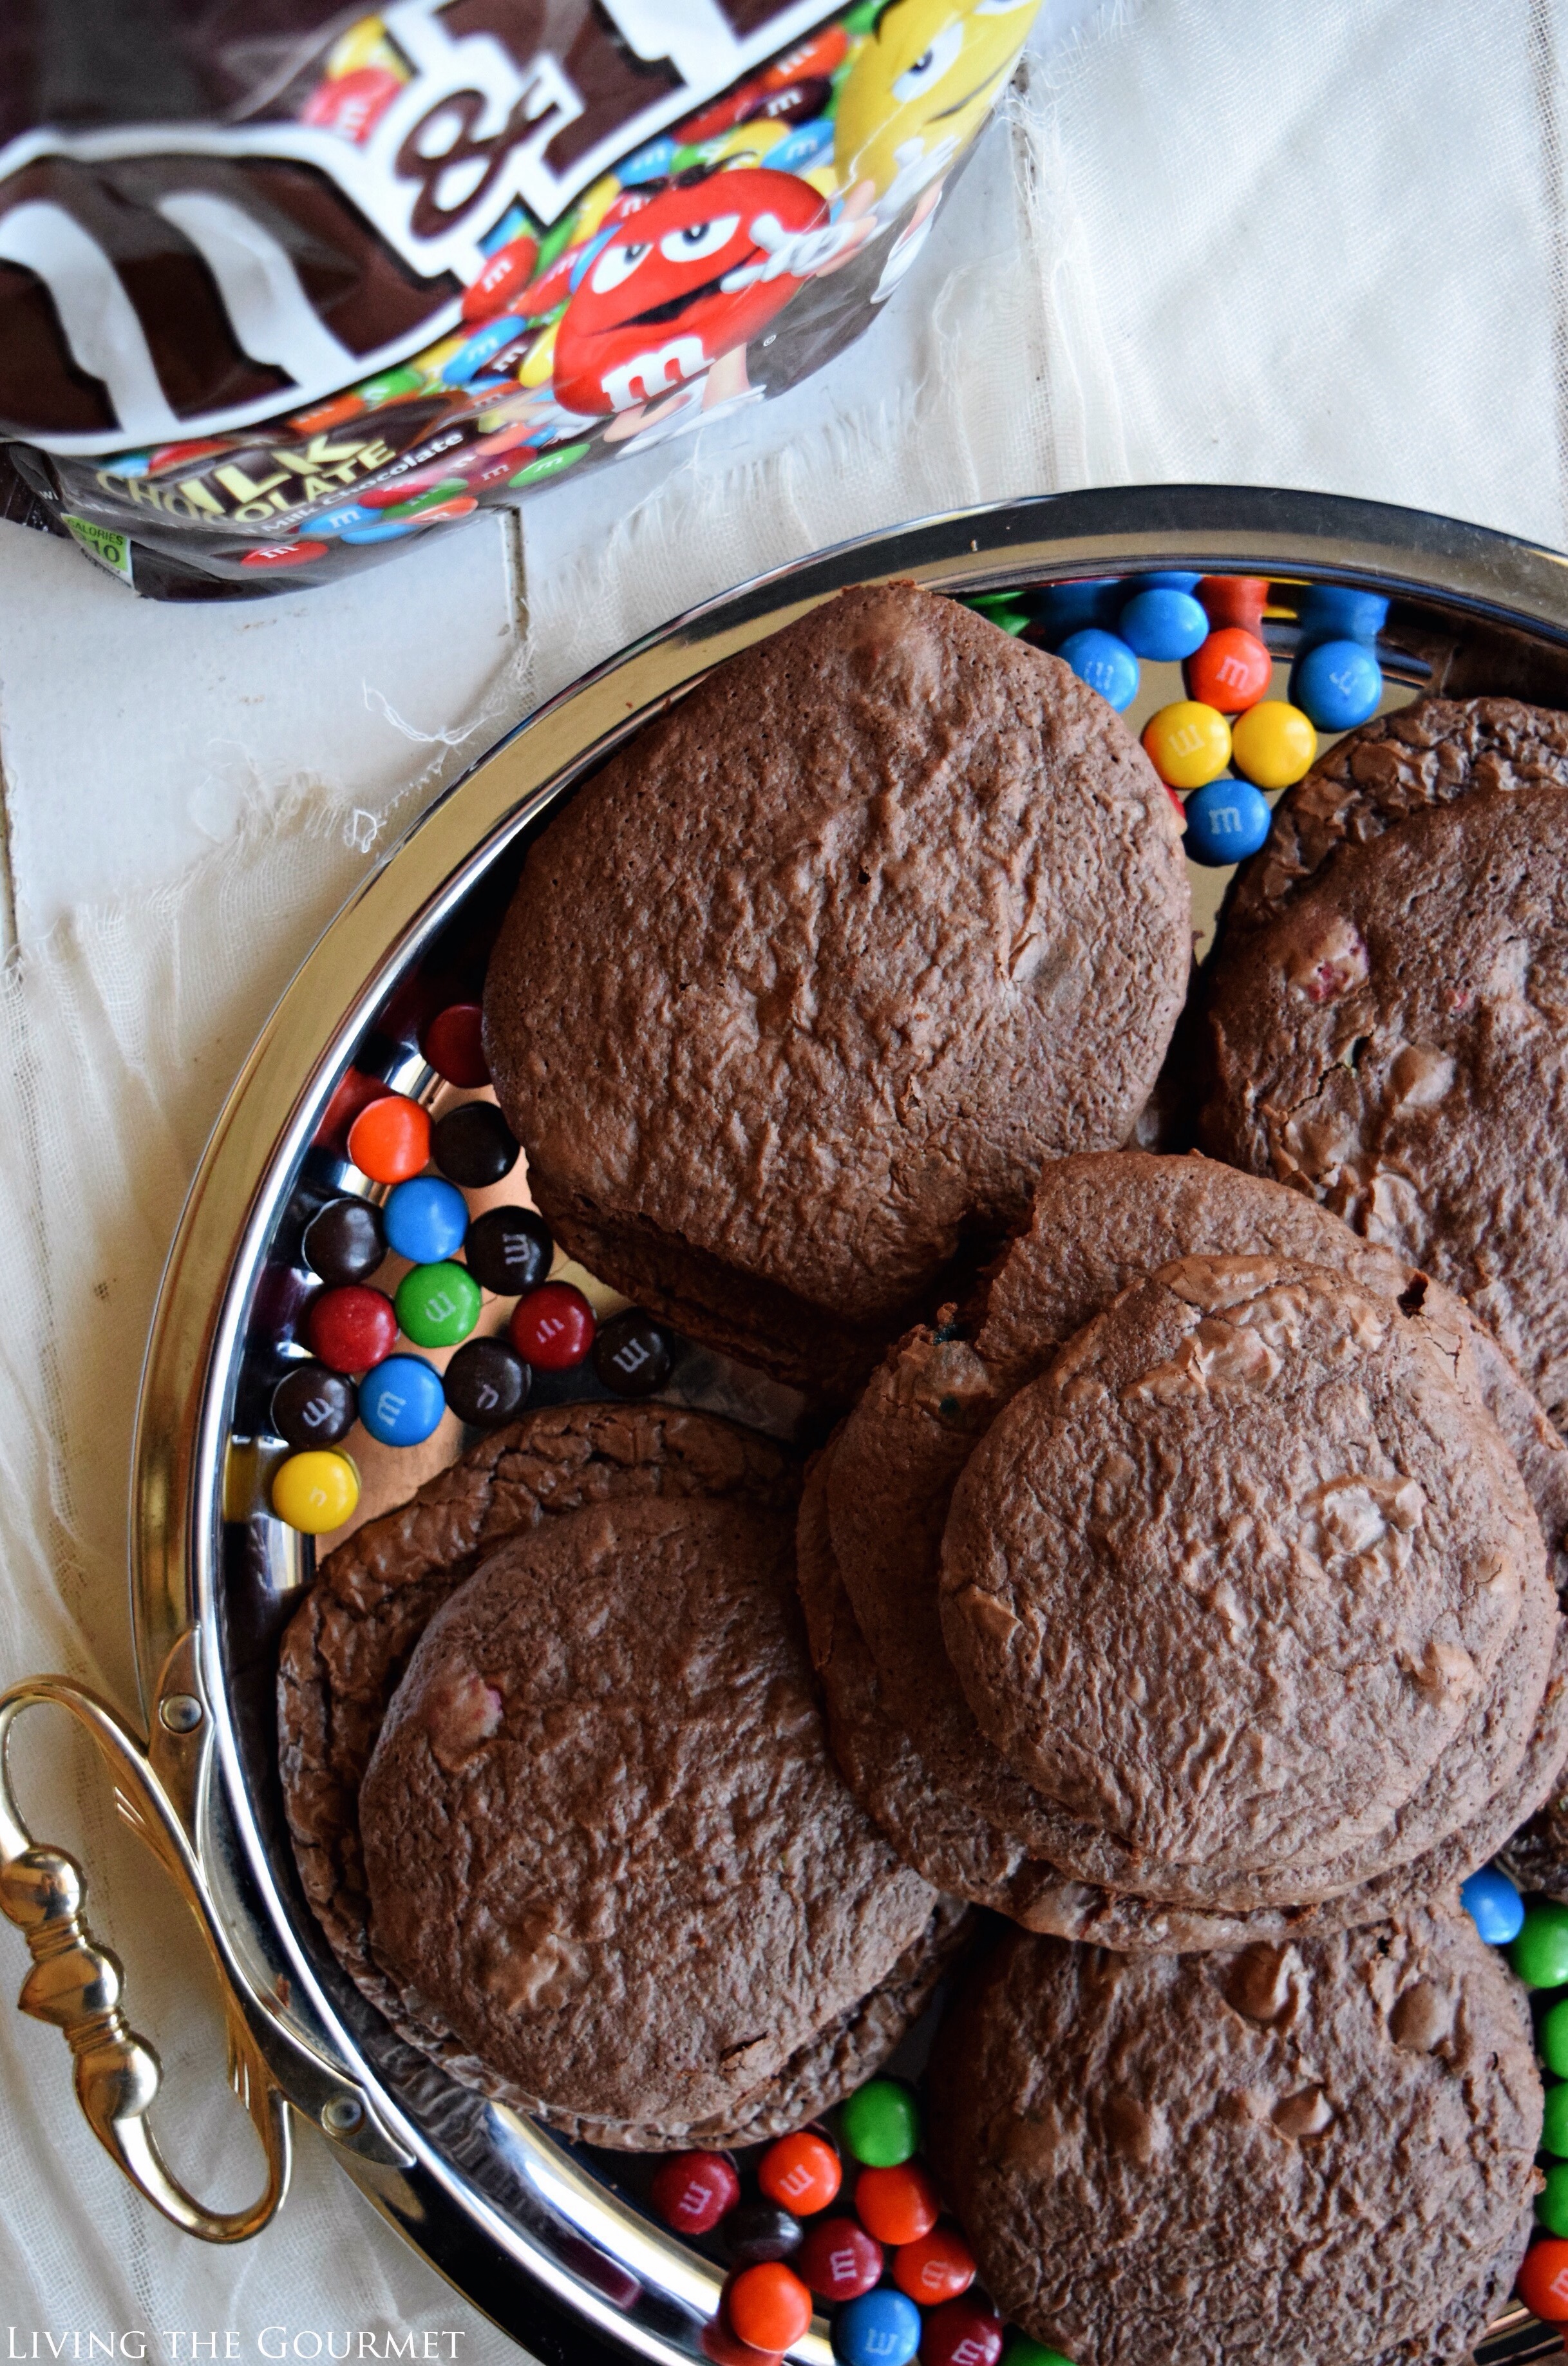 Living the Gourmet: Chocolate Brownie M&M's Cookies